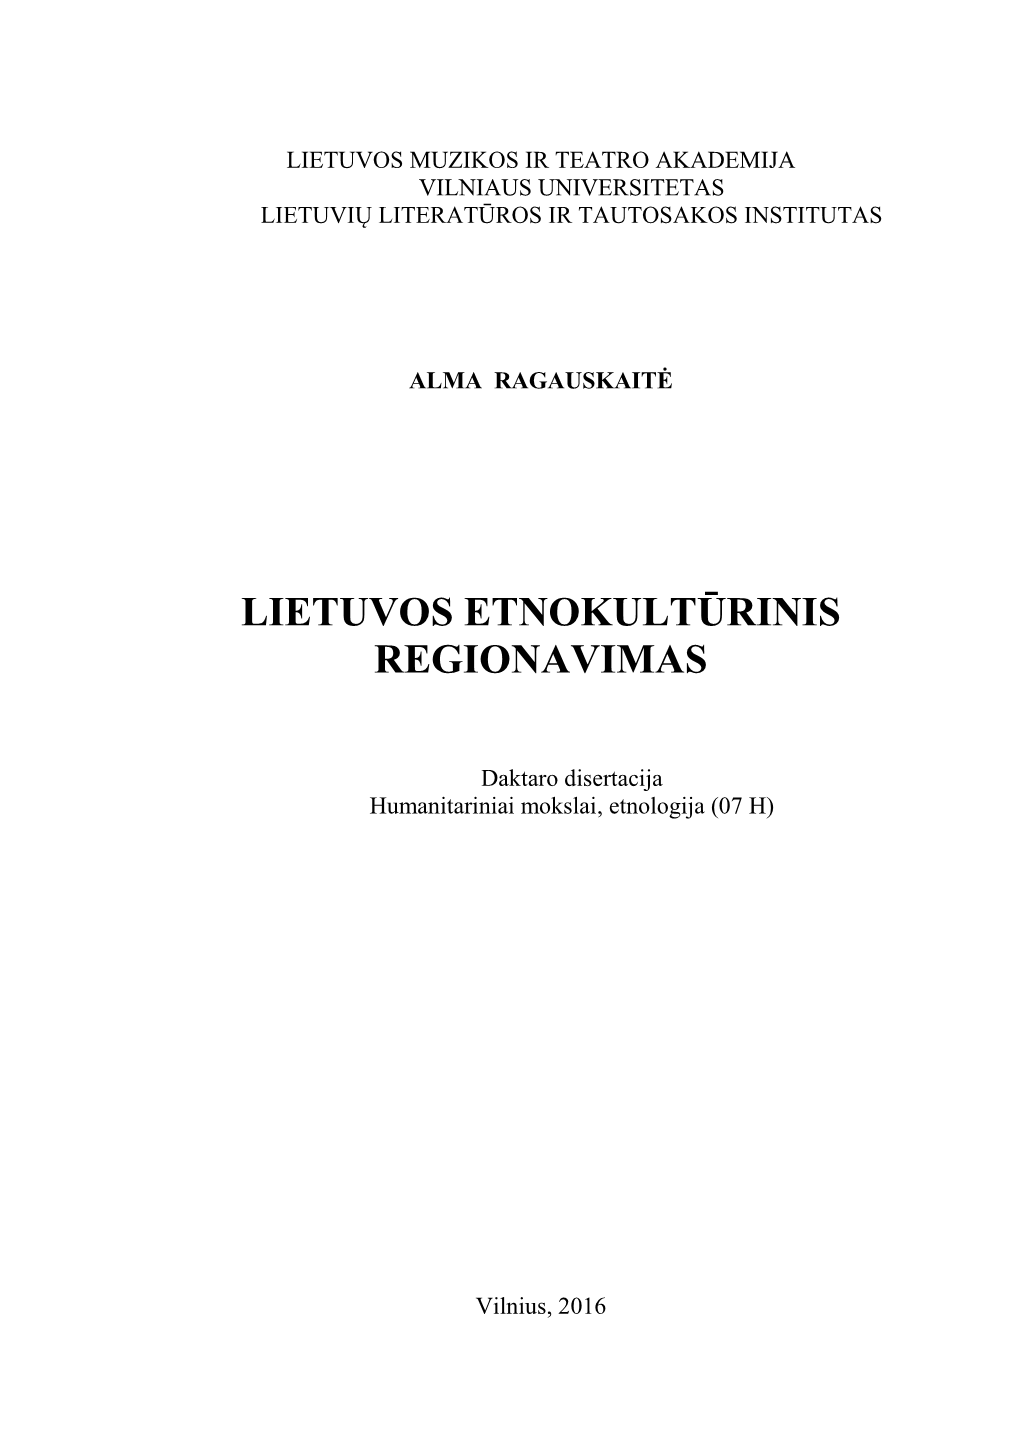 Lietuvos Etnokultūrinis Regionavimas